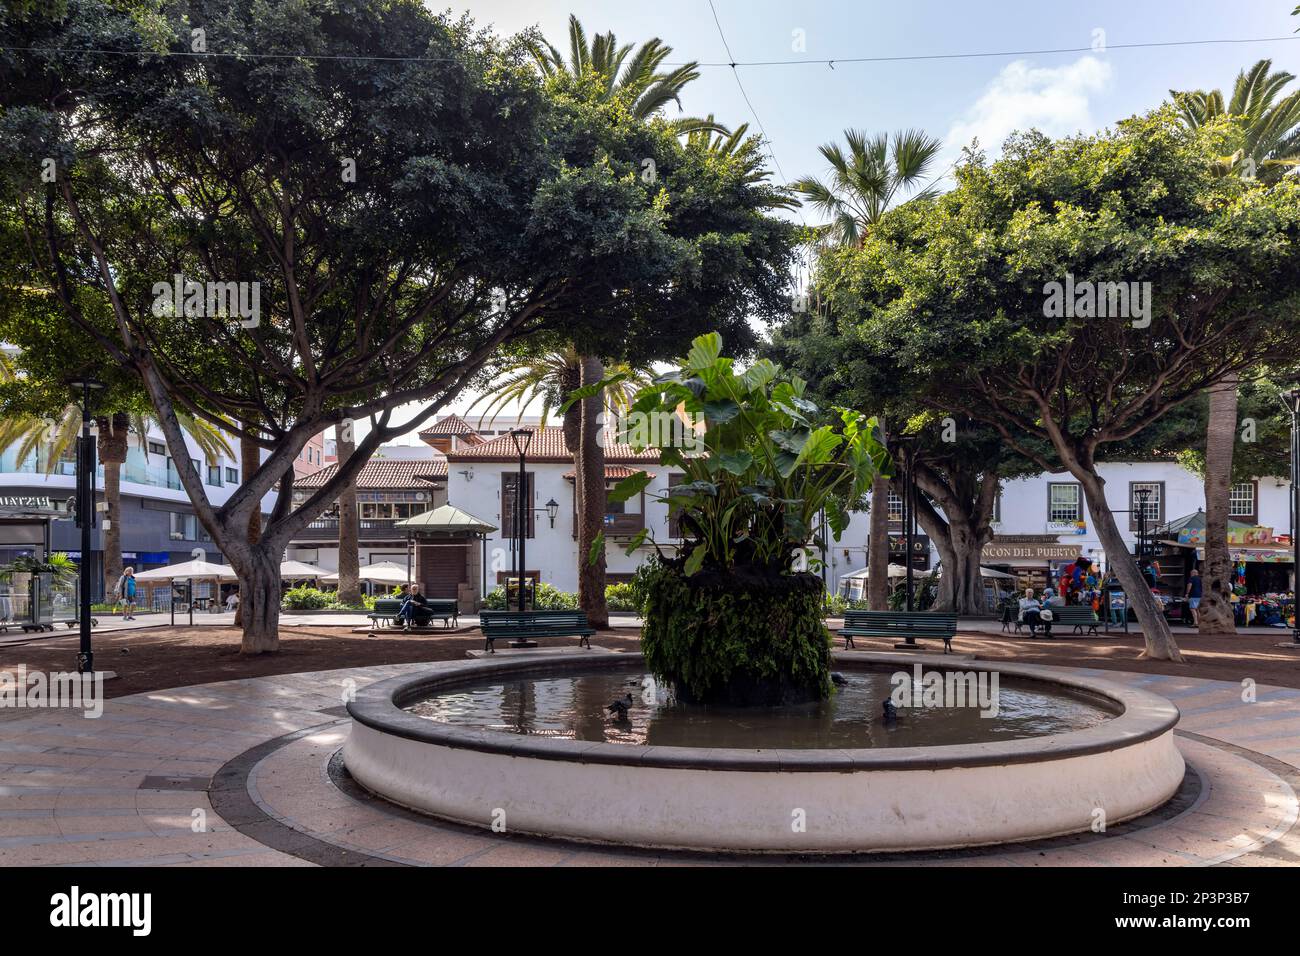 Plaza del Charco, der Hauptplatz der Stadt Puerto de la Cruz, Kanarische Inseln. Stockfoto